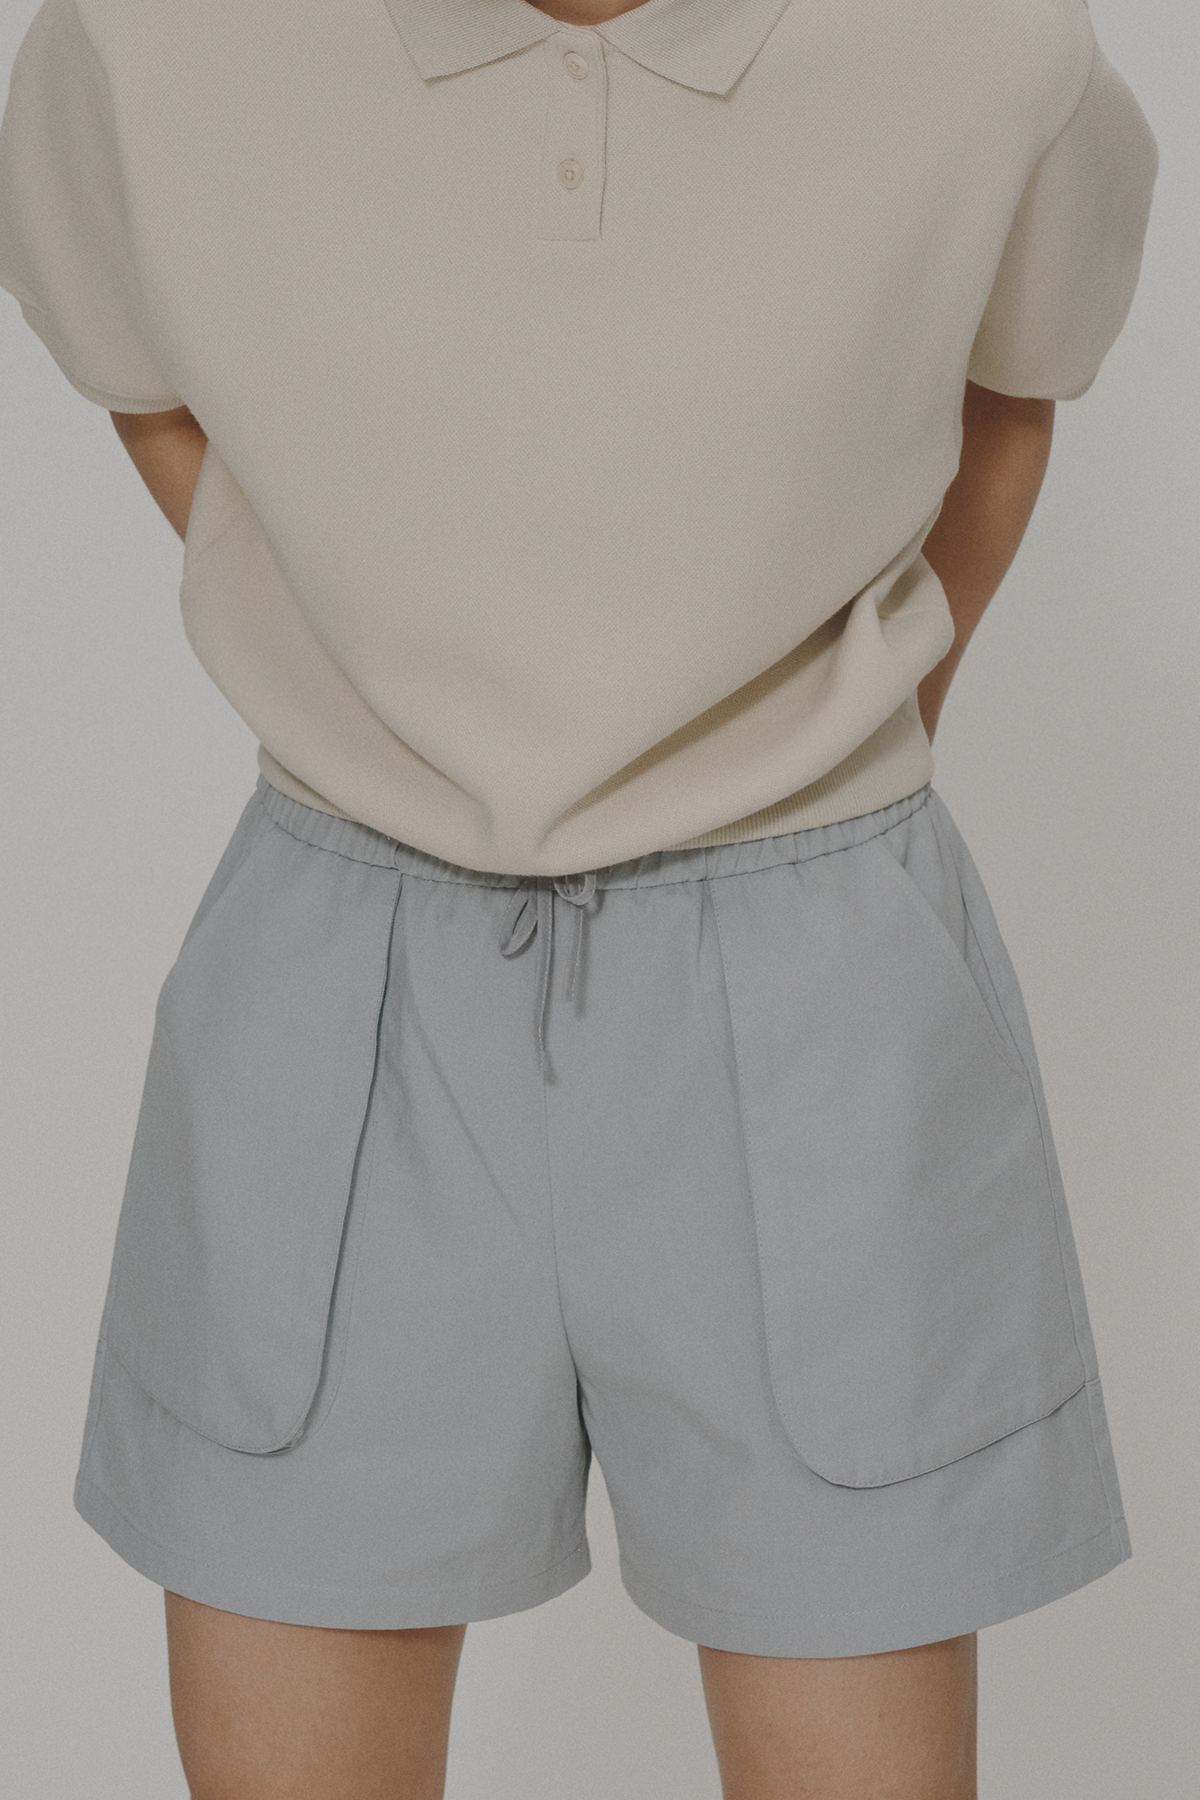 Pocket line half pants(dusty blue)